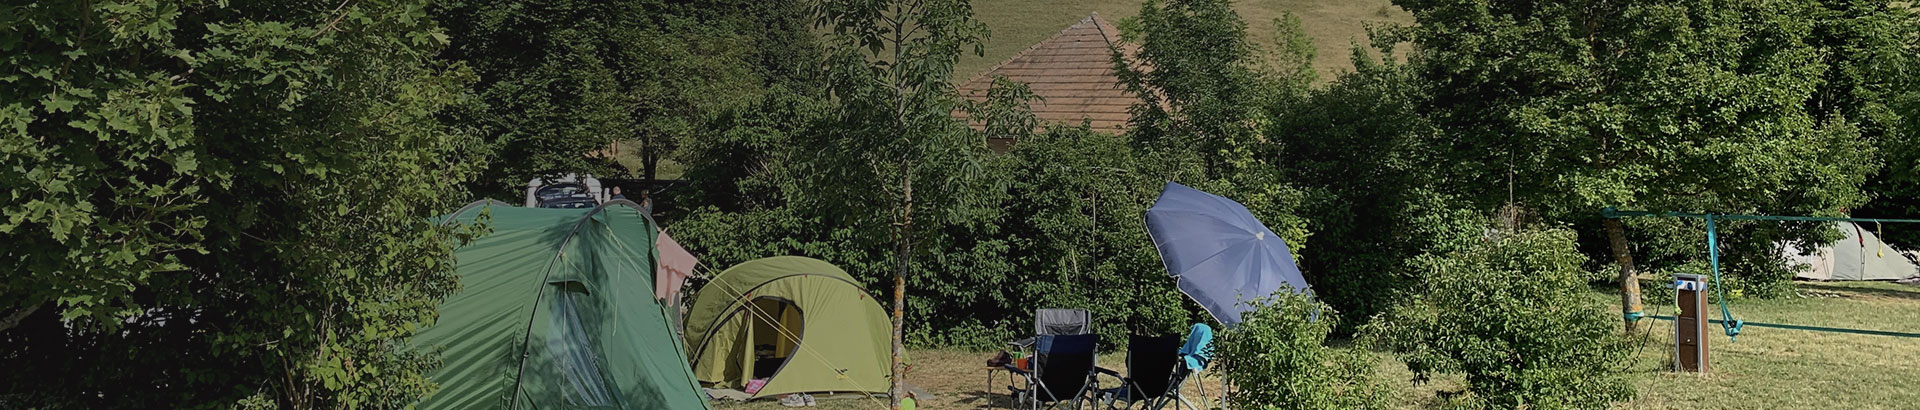 Camping Belleroche tentes